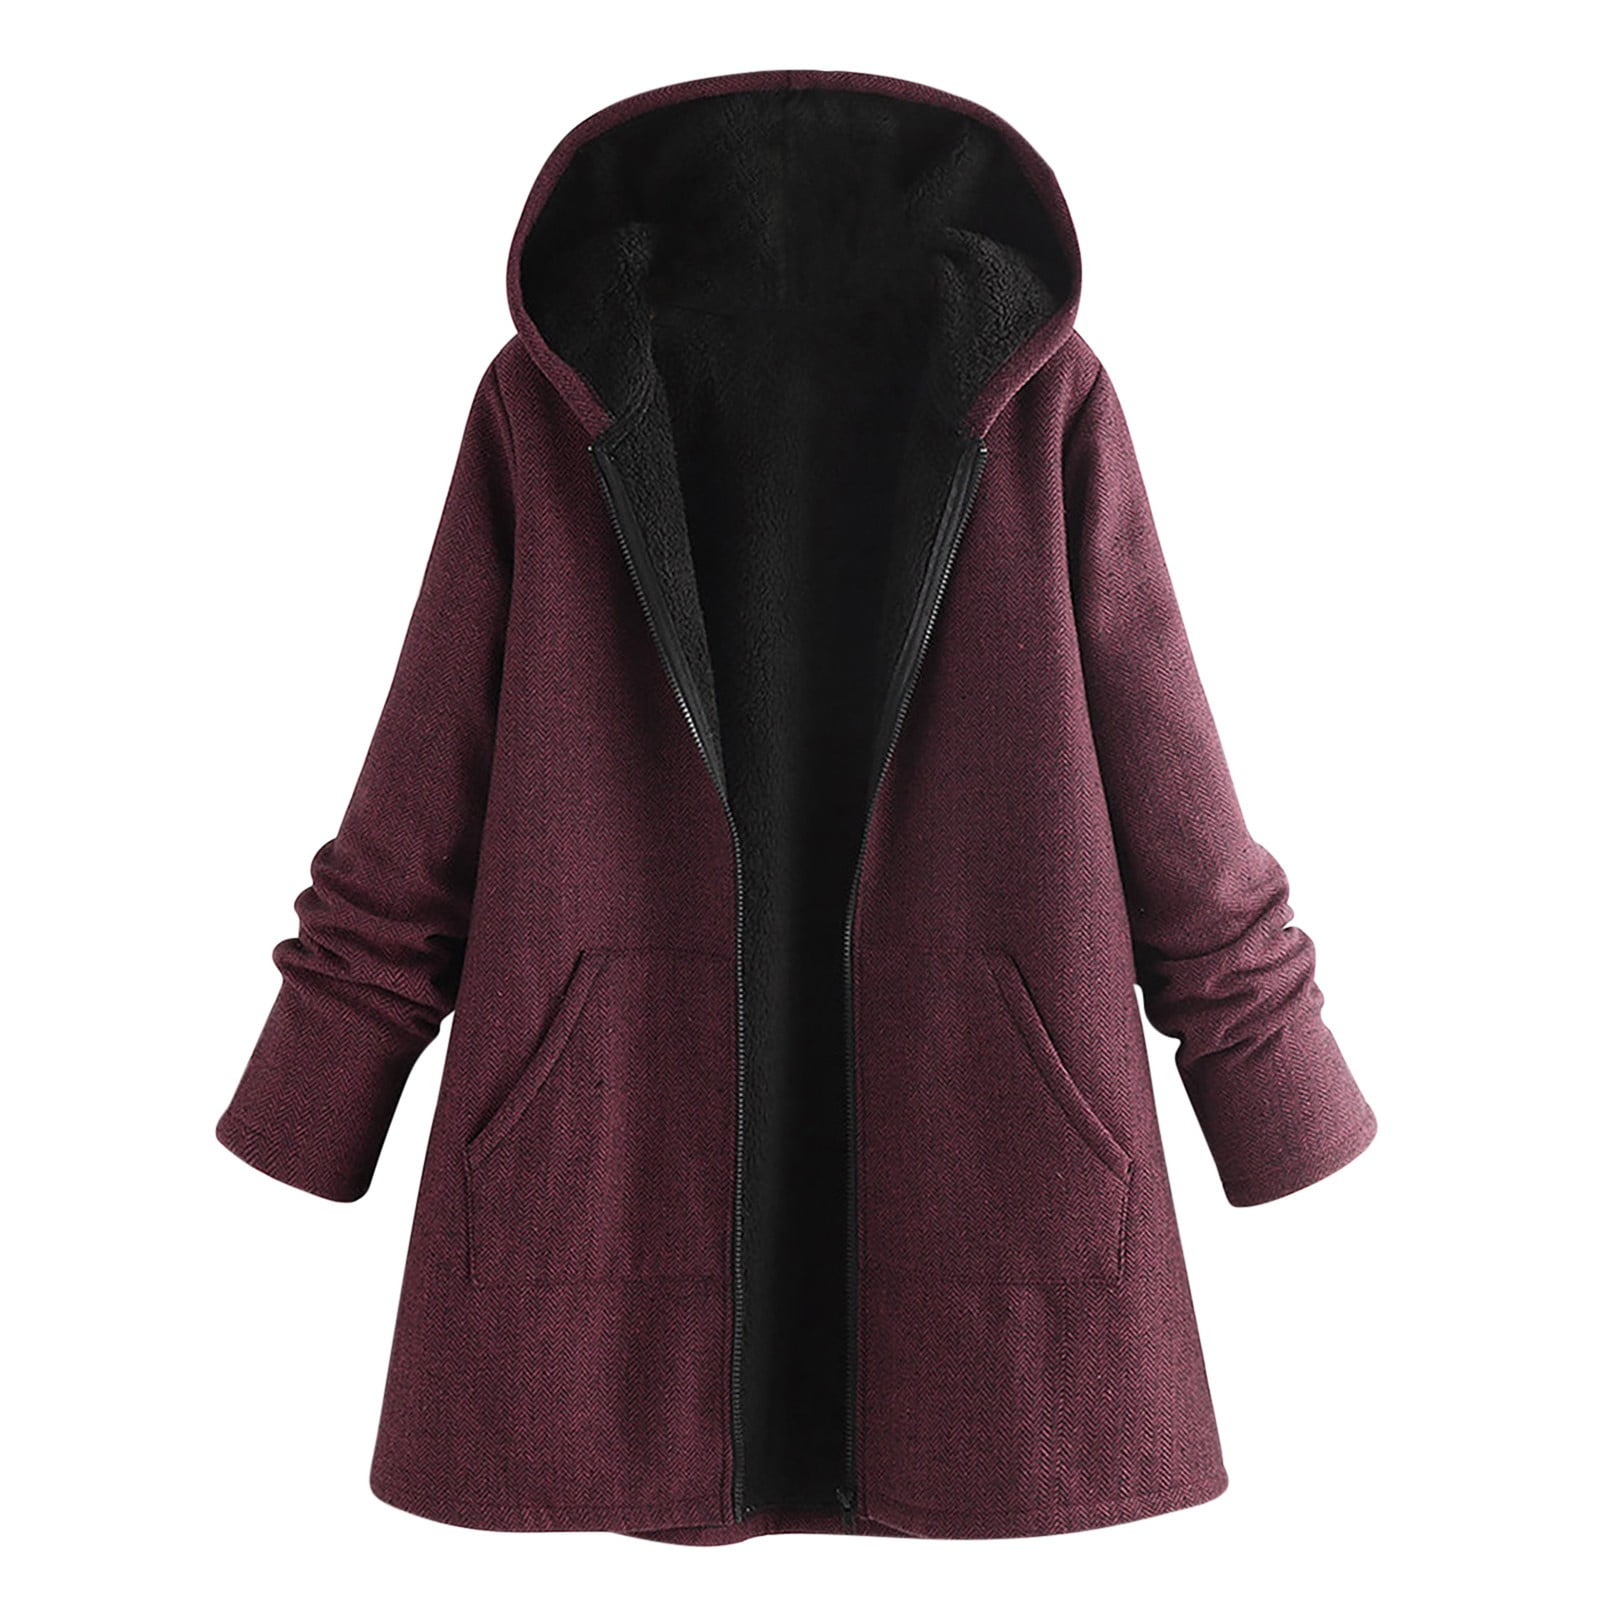 XFLWAM Plus Size Winter Coats for Women Fleece Lined Faux Fur Parkas ...